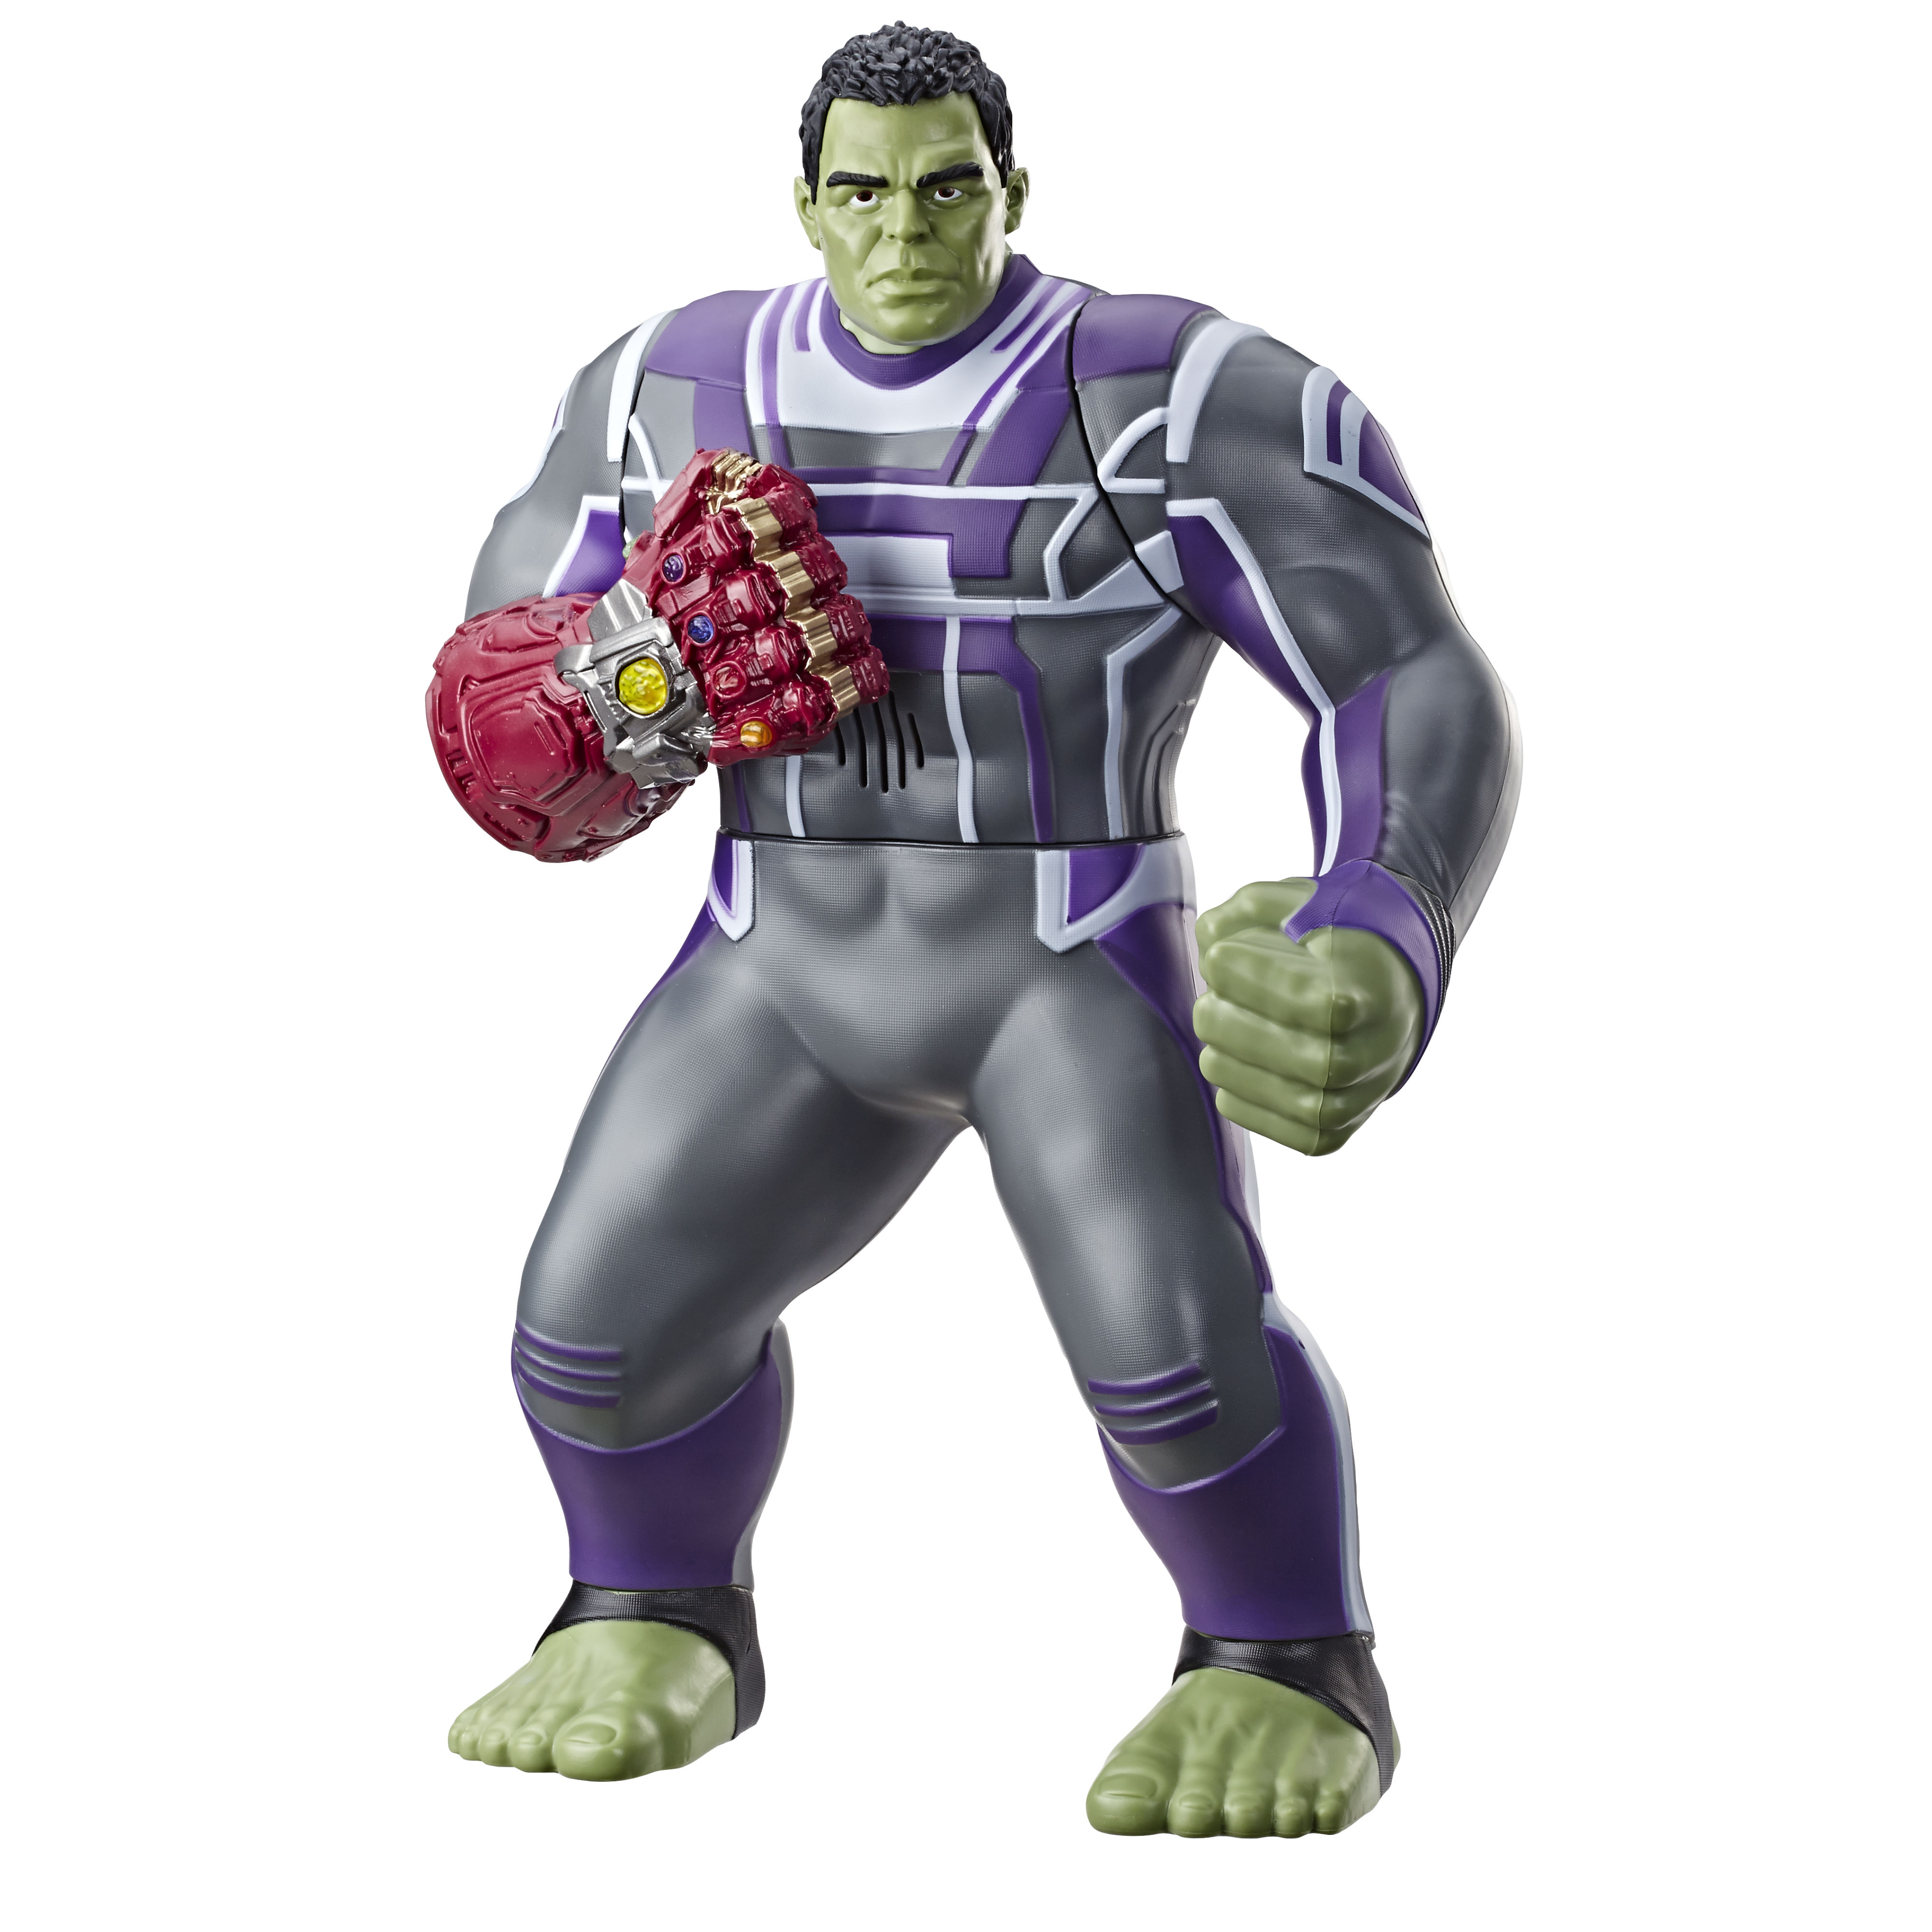 14-inch Power Punch Hulk loose